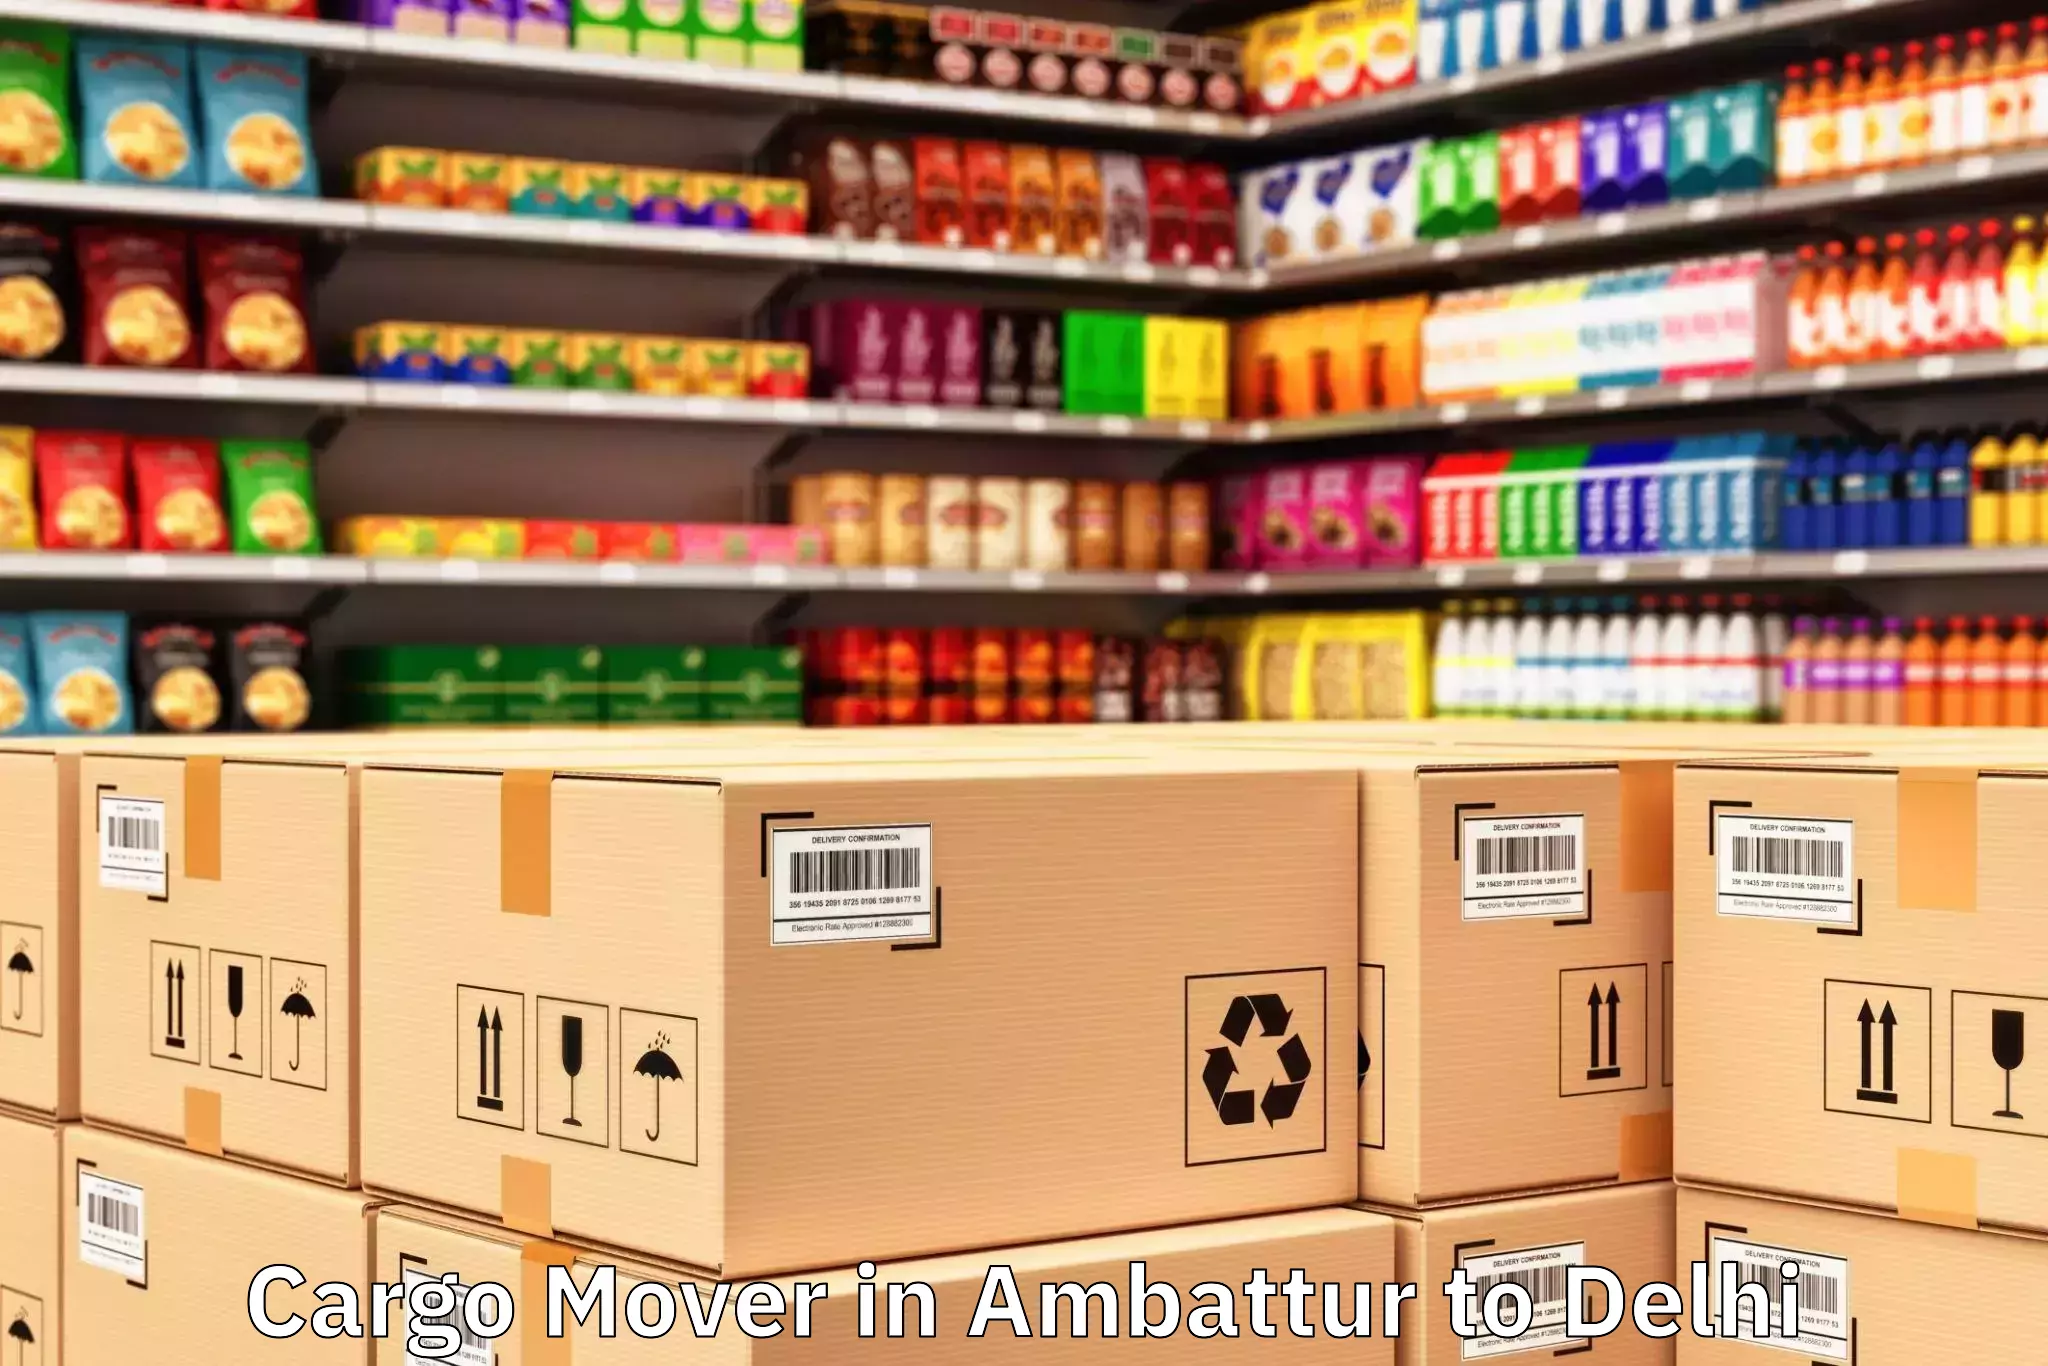 Professional Ambattur to Delhi Technological University Dtu Cargo Mover